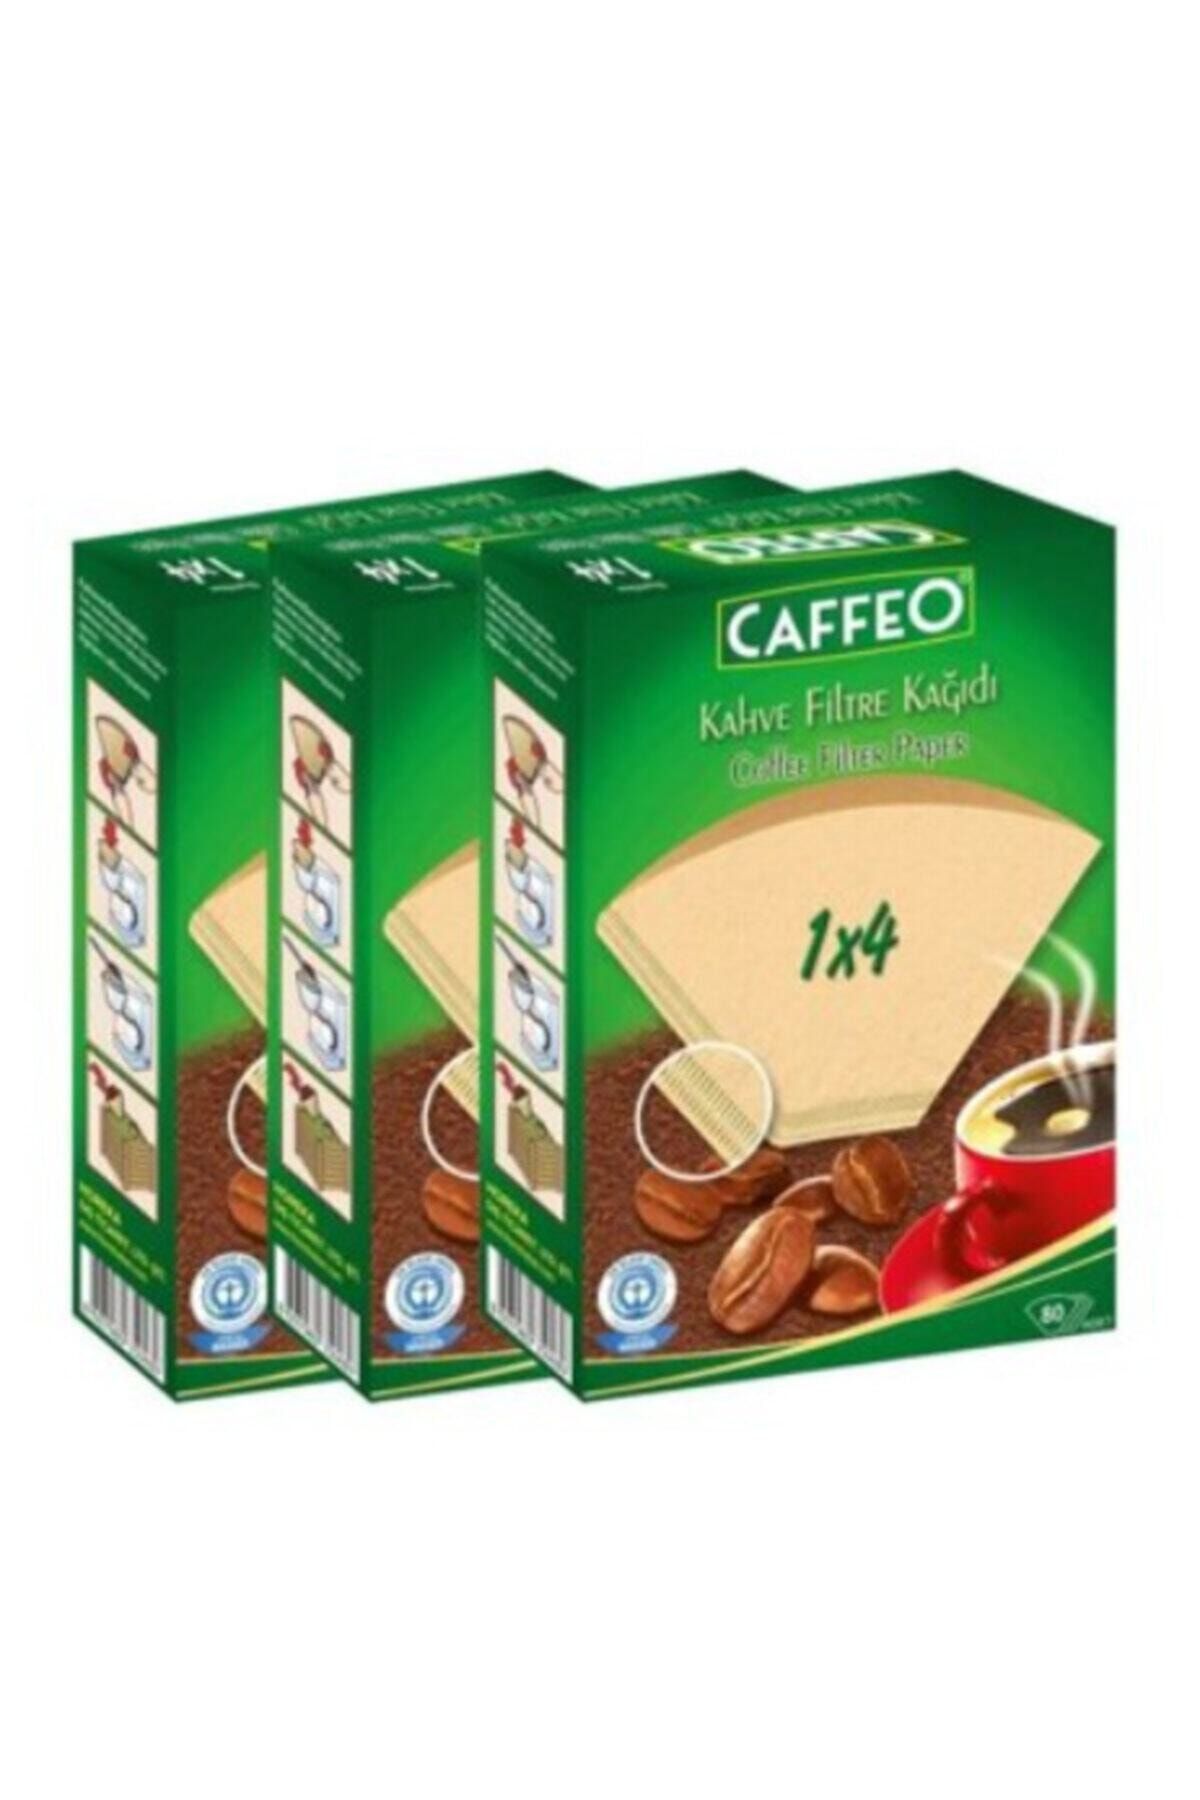 Caffeo Kahve Filtre Kağıdı 1x4 80 Adet 3 Lü Set (240 Adet)